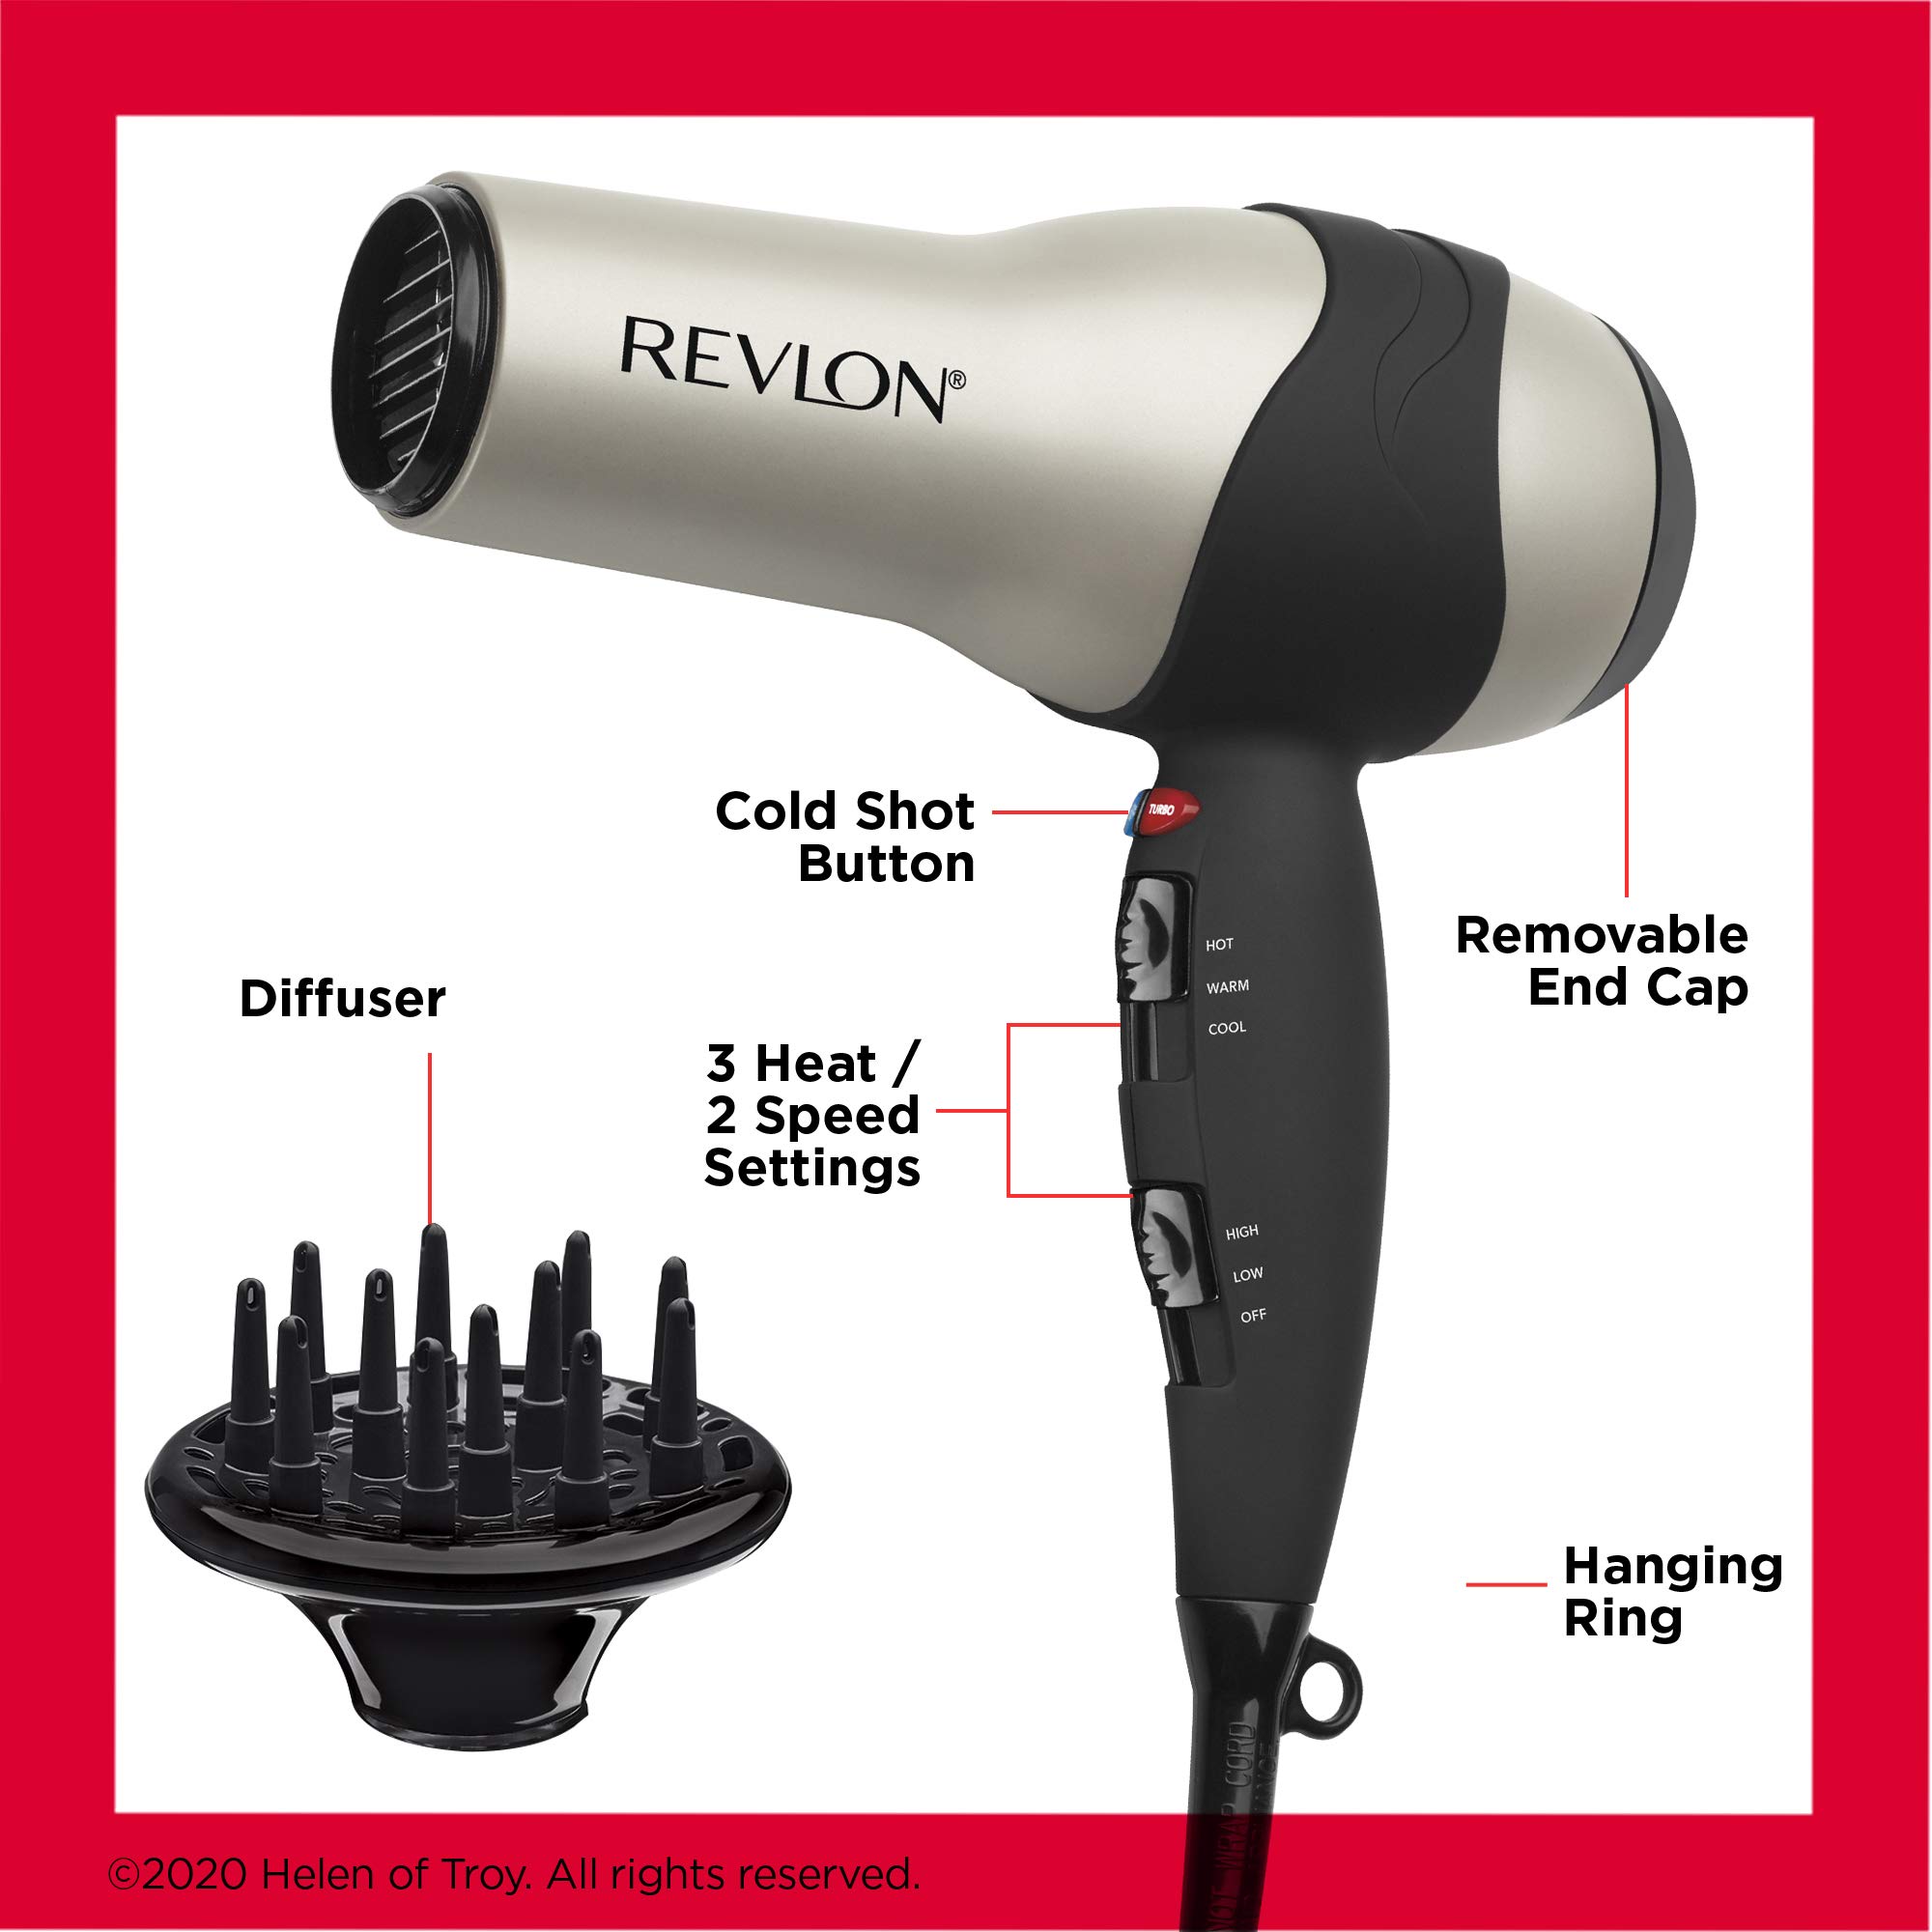 REVLON Turbo Hair Dryer | 1875 Watts of Maximum Shine, Fast Dry (Silver)